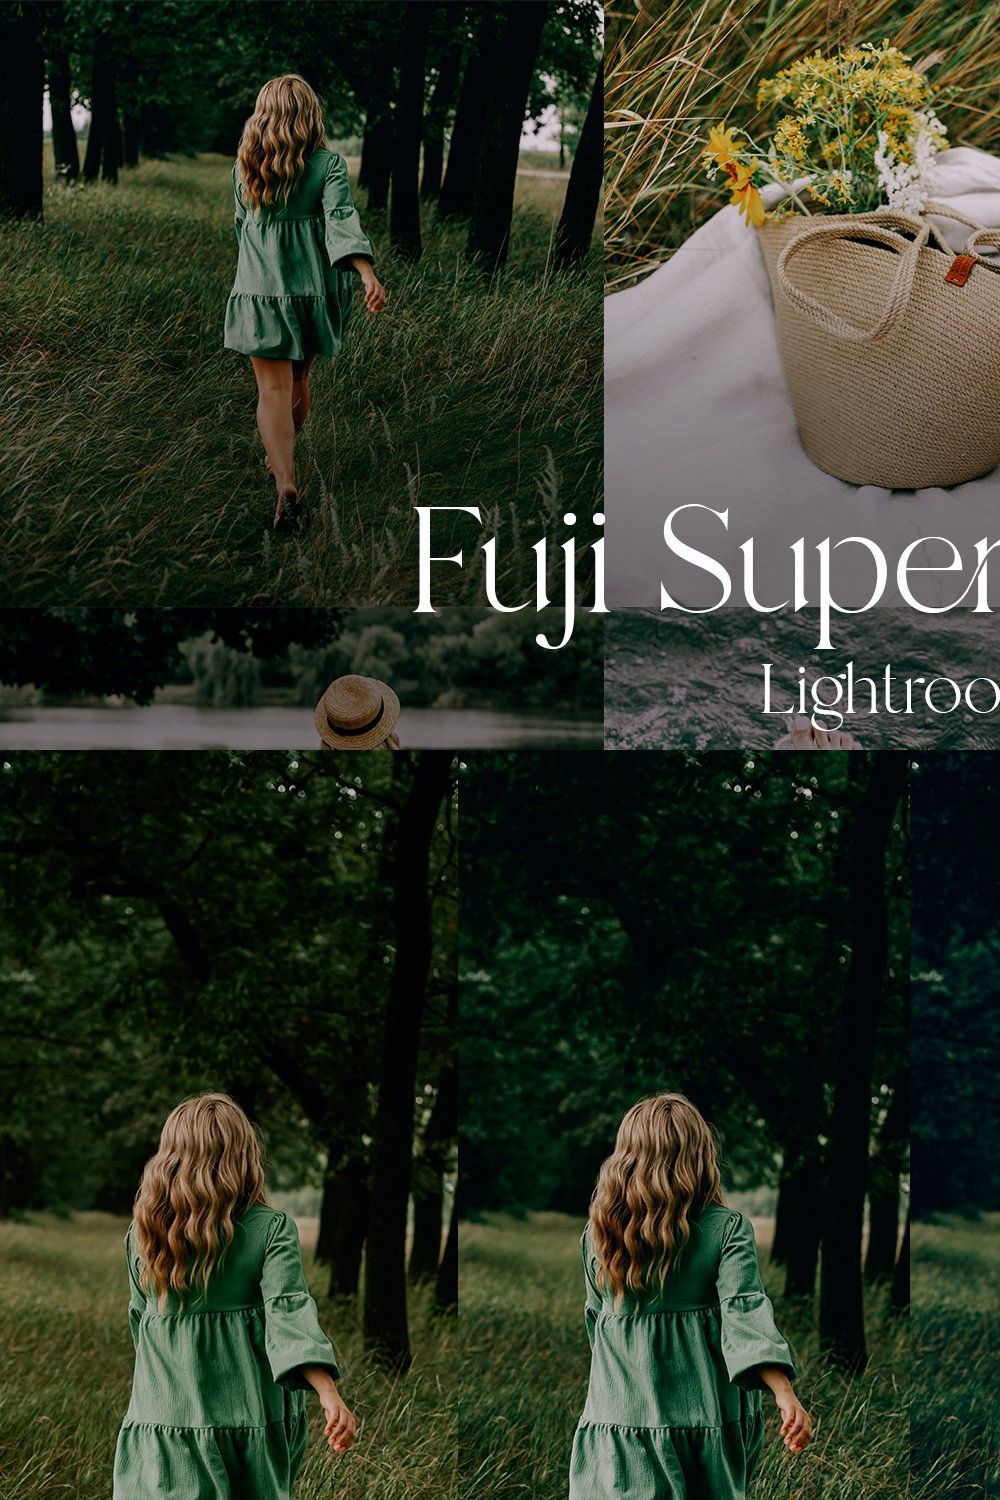 Fuji Superia 400 — Lightroom pinterest preview image.